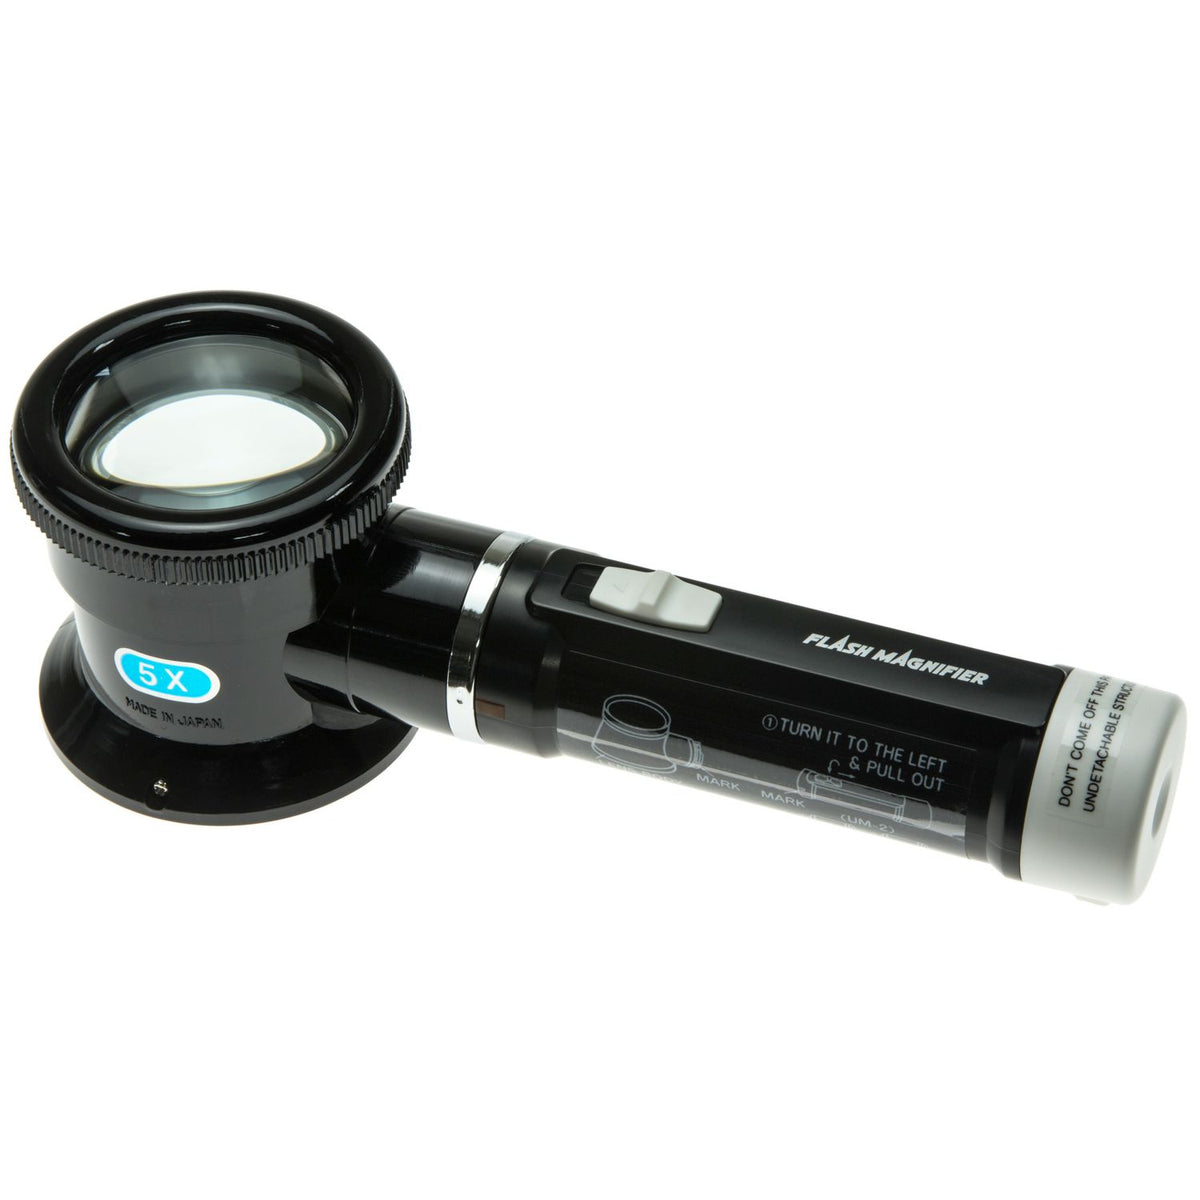 Donegan Optical Binocular Magnifier, Lensplate No.7